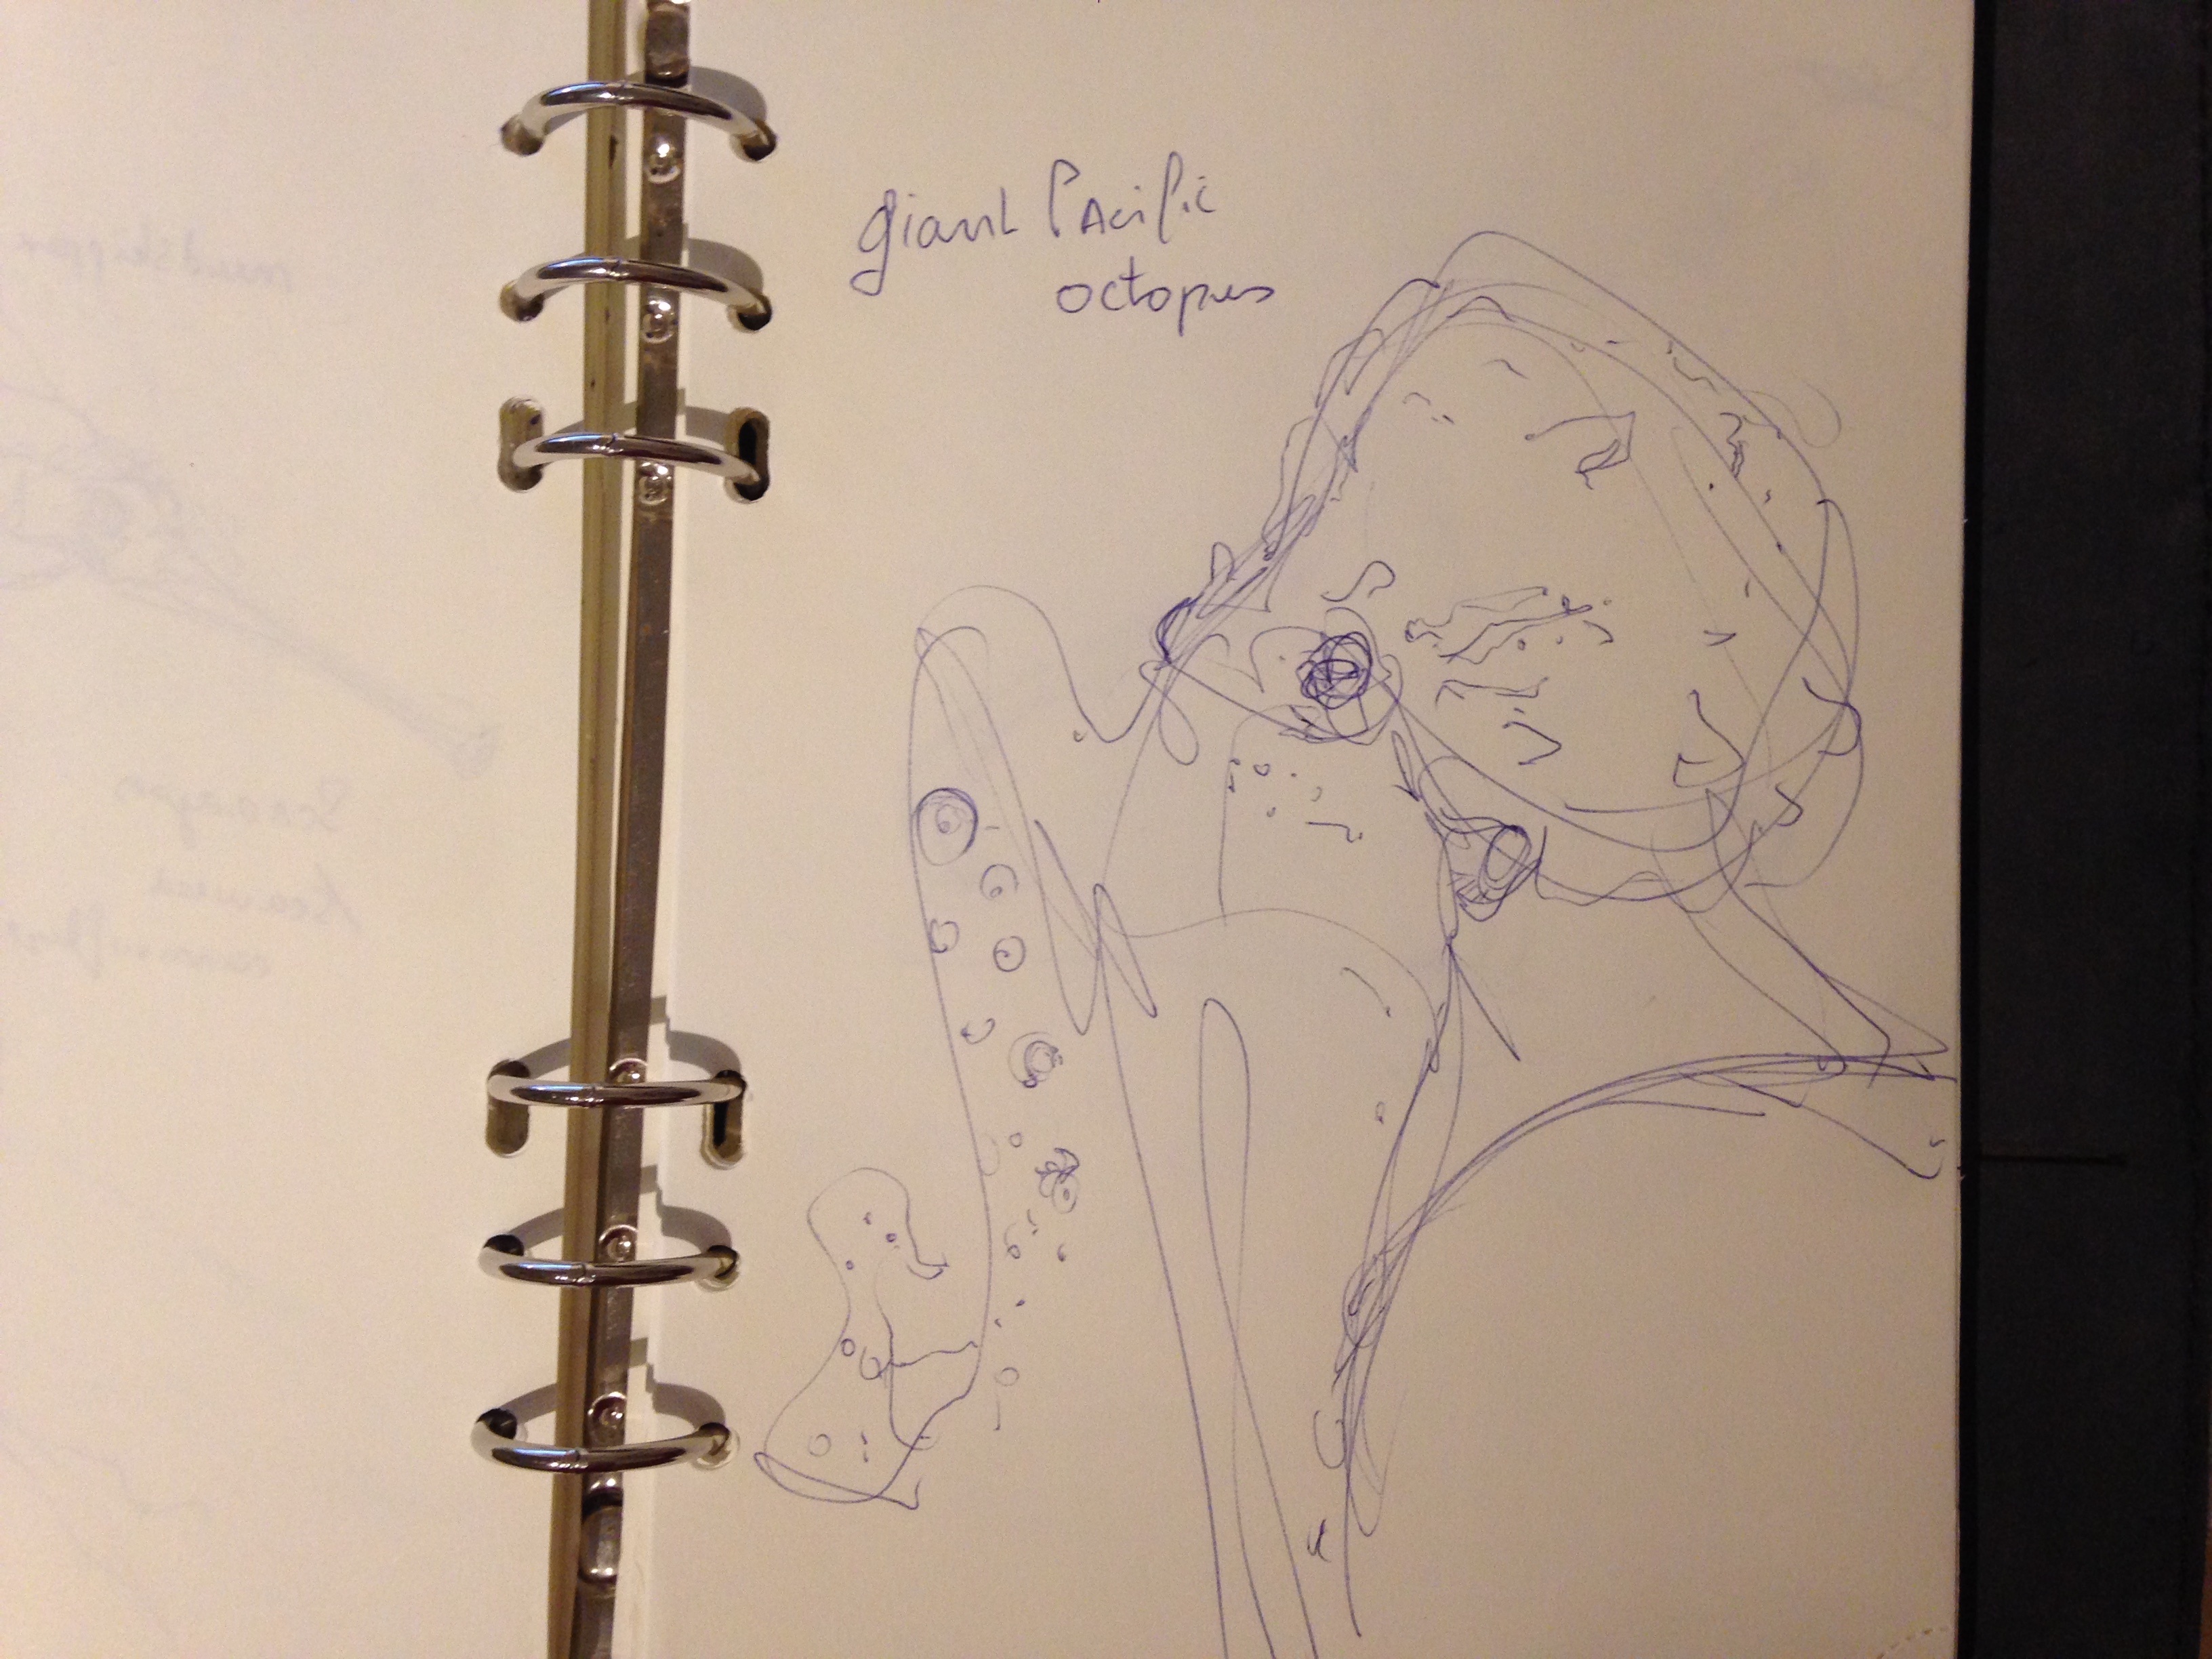 The design sketchbook sketch boston acquarium fish drawing ball point pen blue bic giant octopus